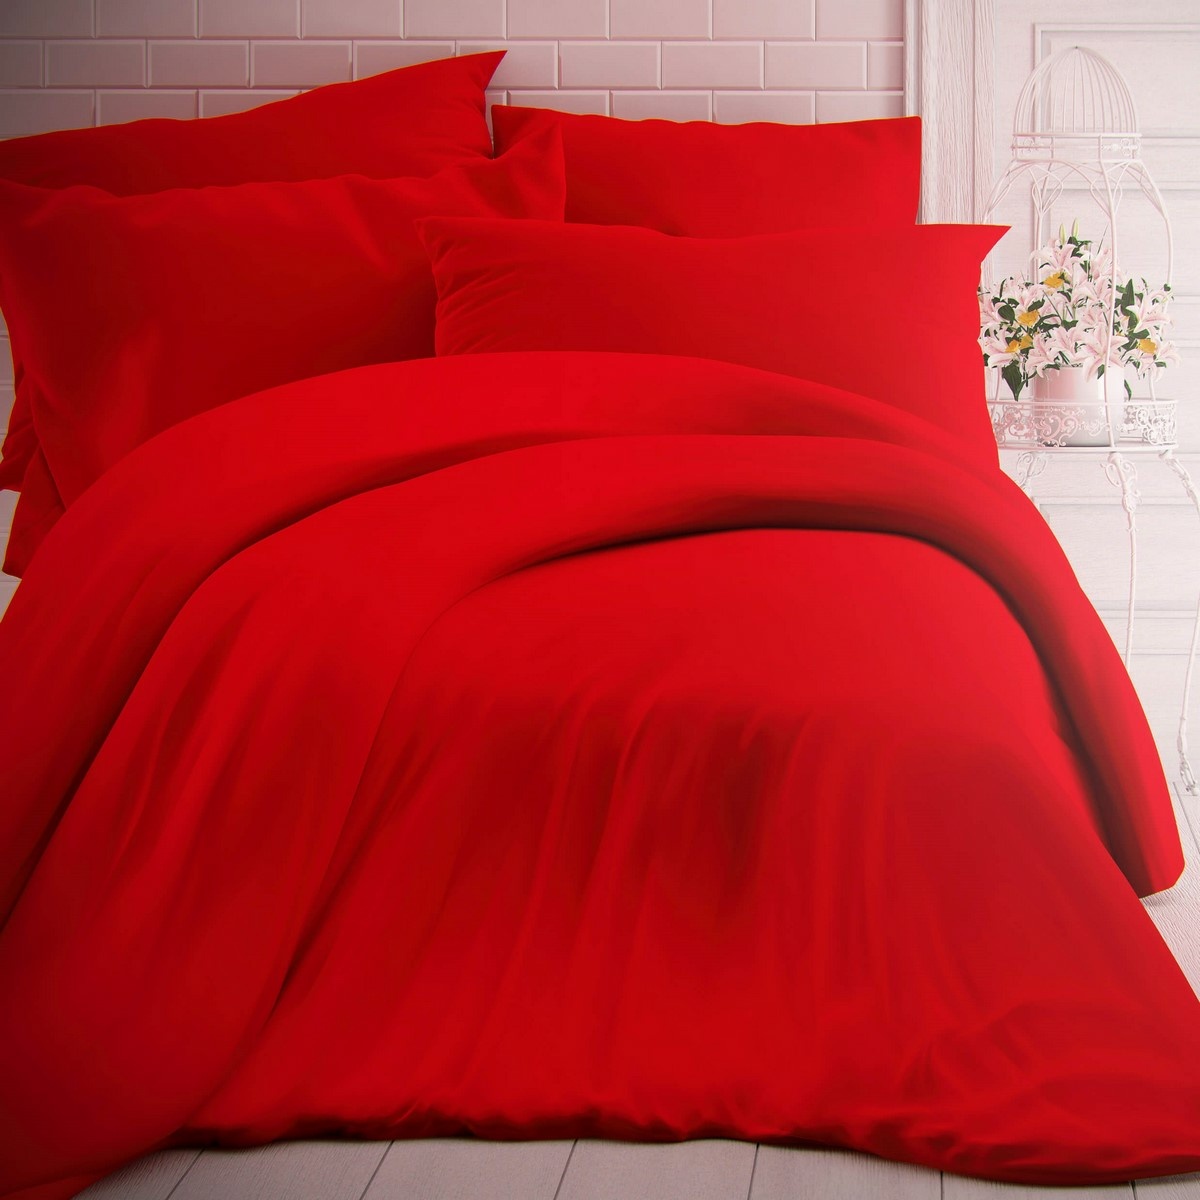 Kvalitex Lenjerie de pat din bumbac roșie, 220 x 200 cm, 2 buc. 70 x 90 cm, roșu, 220 x 200 cm, 2 buc. 70 x 90 cm